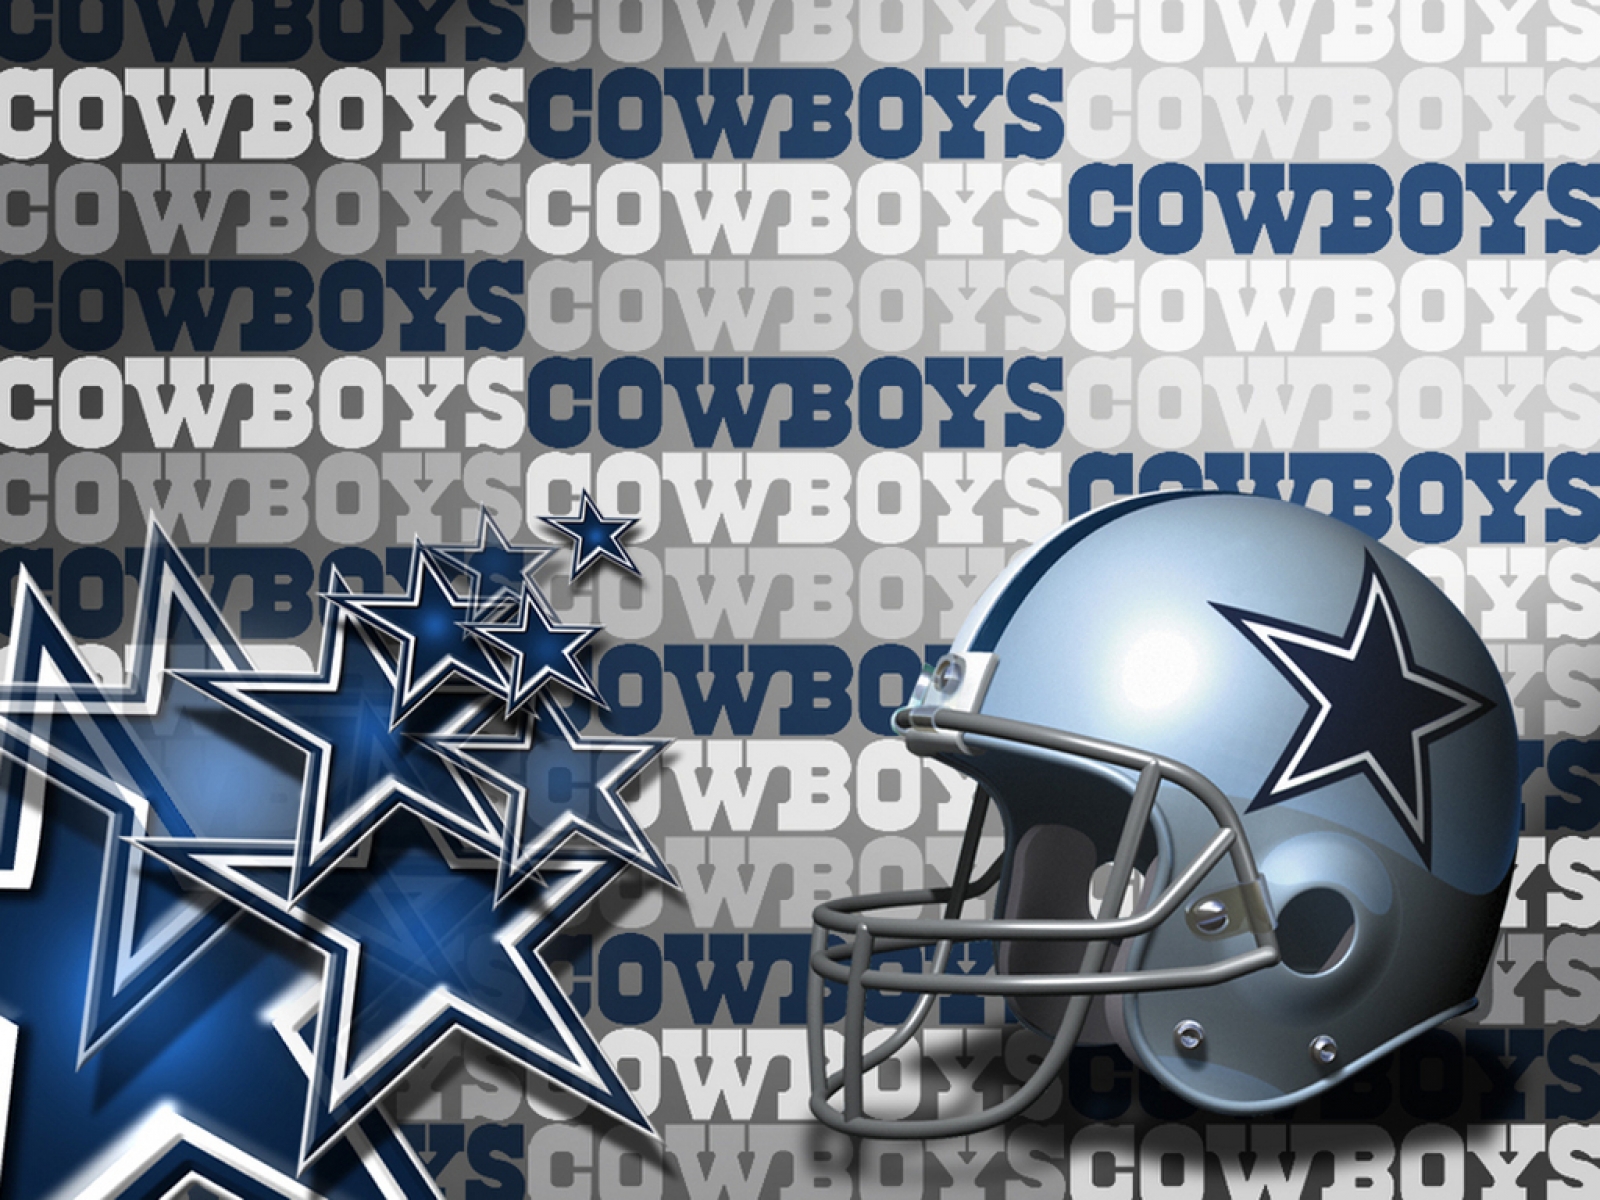 Dallas Cowboys Live Wallpaper Free Android App Market Cowboys Posters